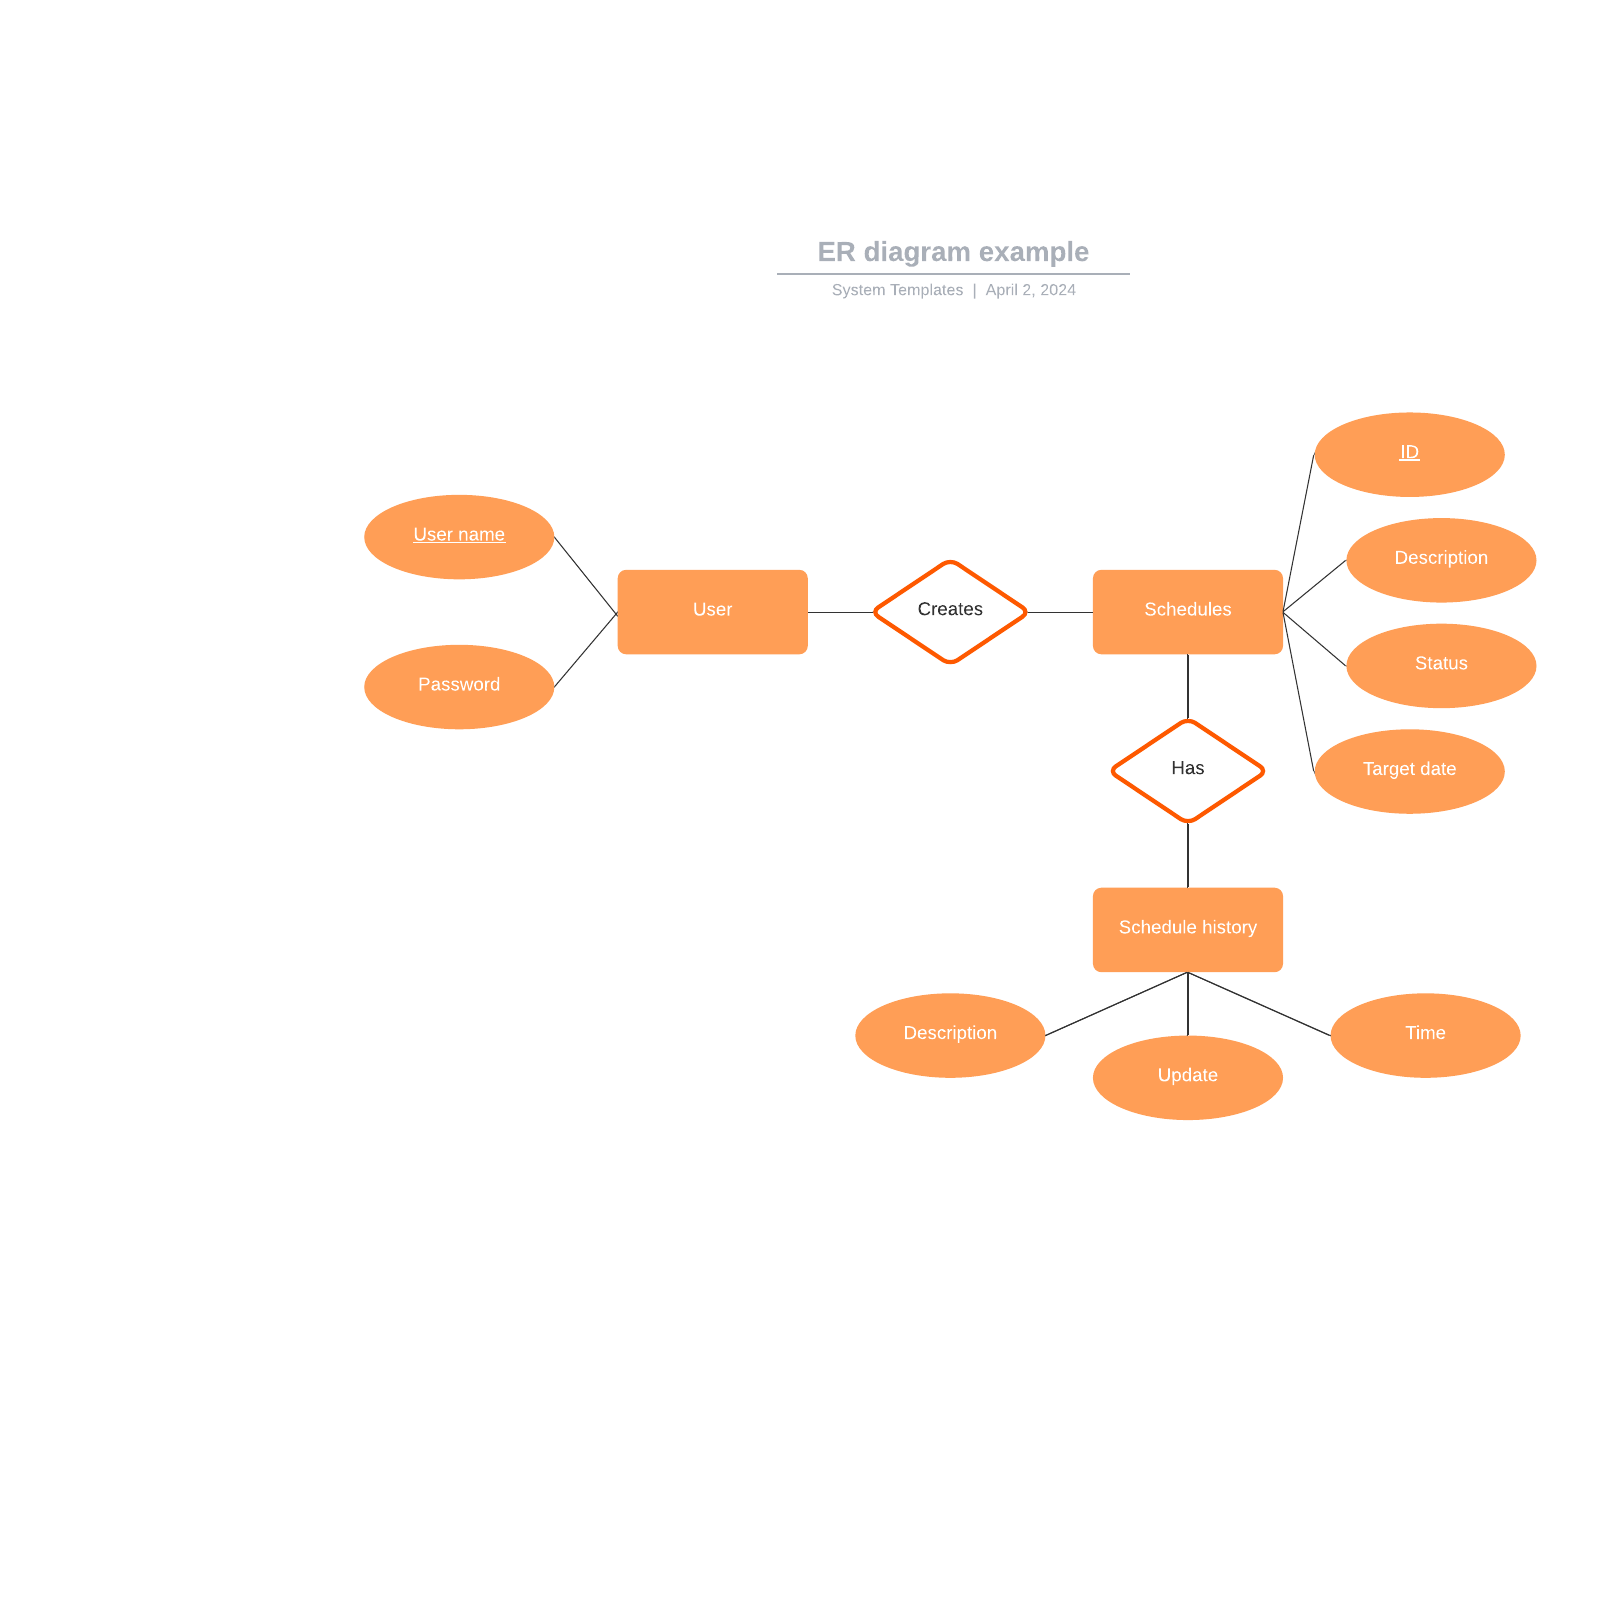 ER diagram example example